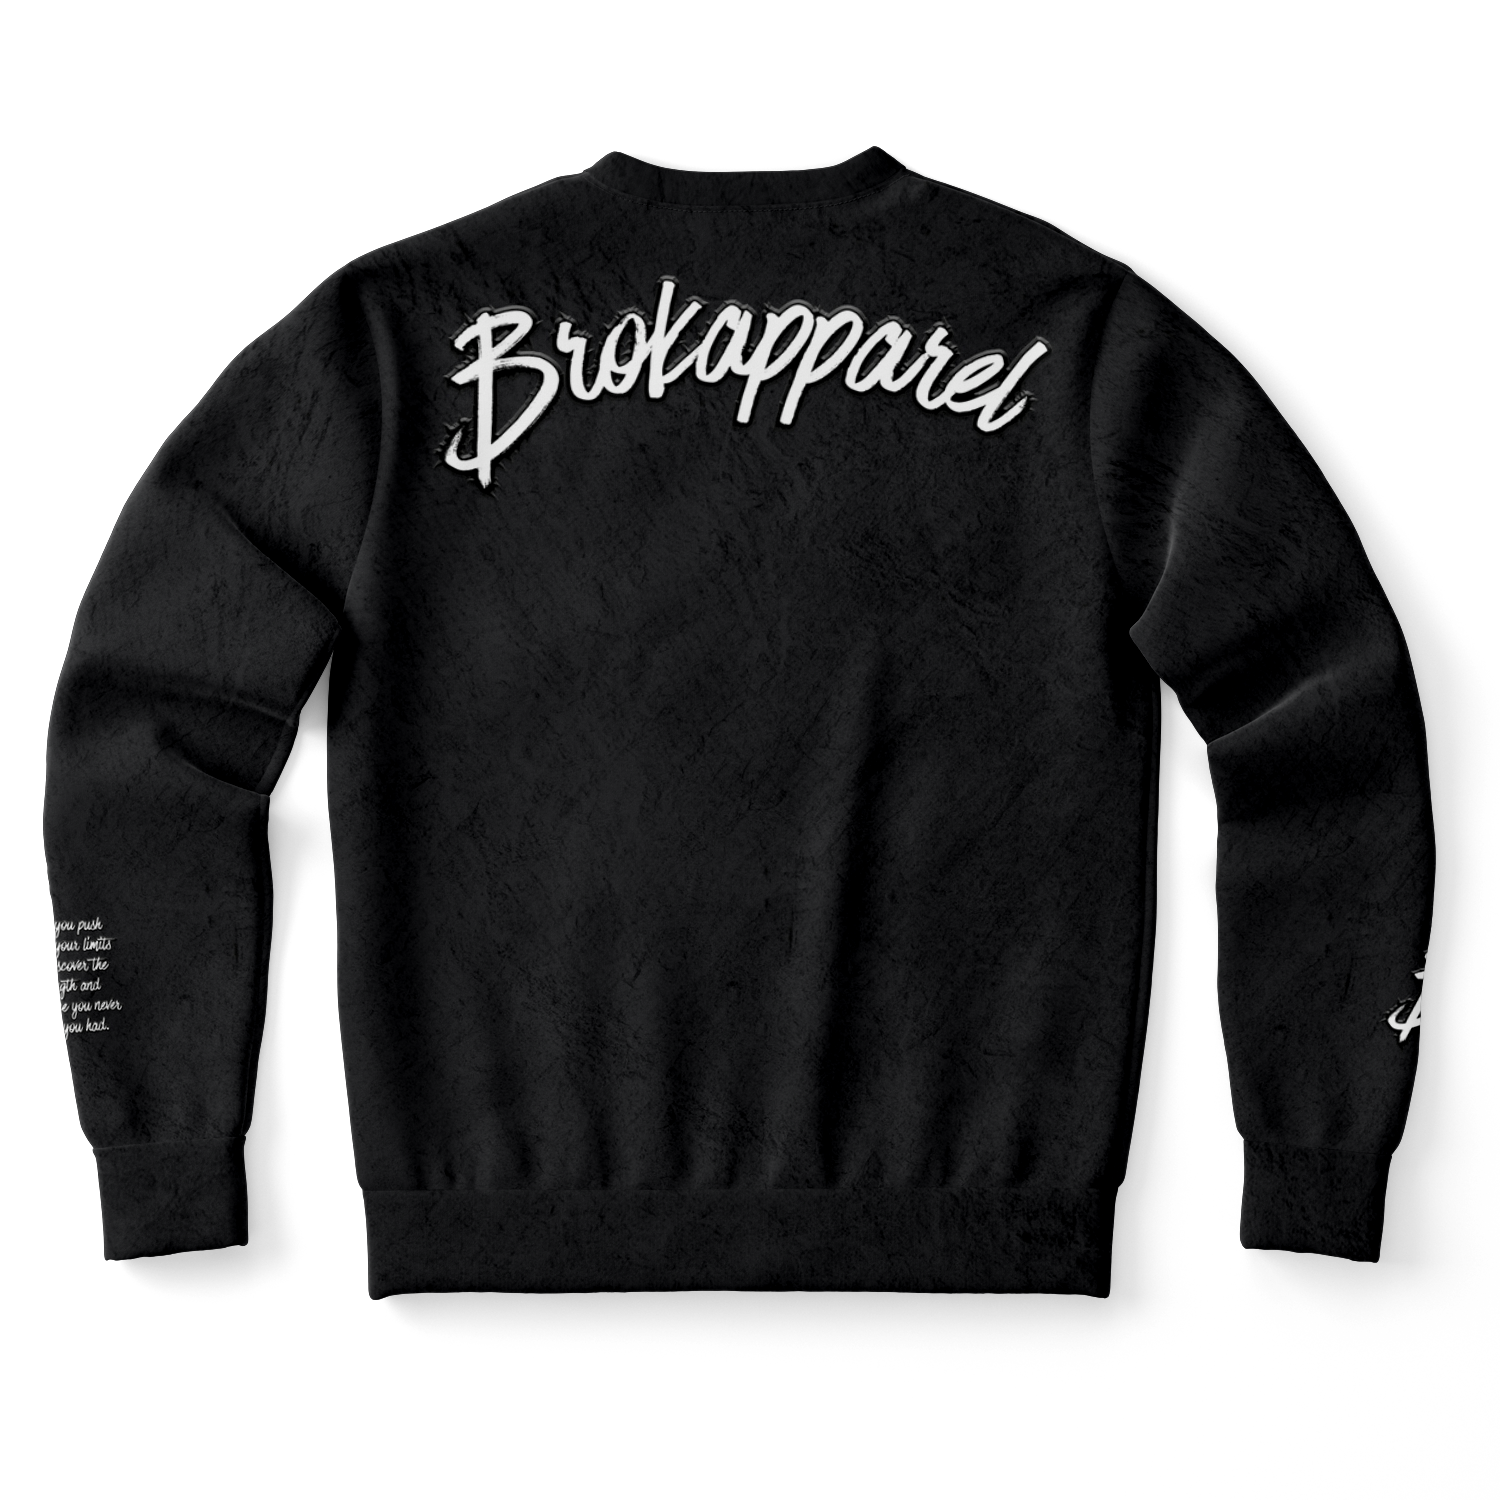 BA Fashion Sweatshirt - AOP